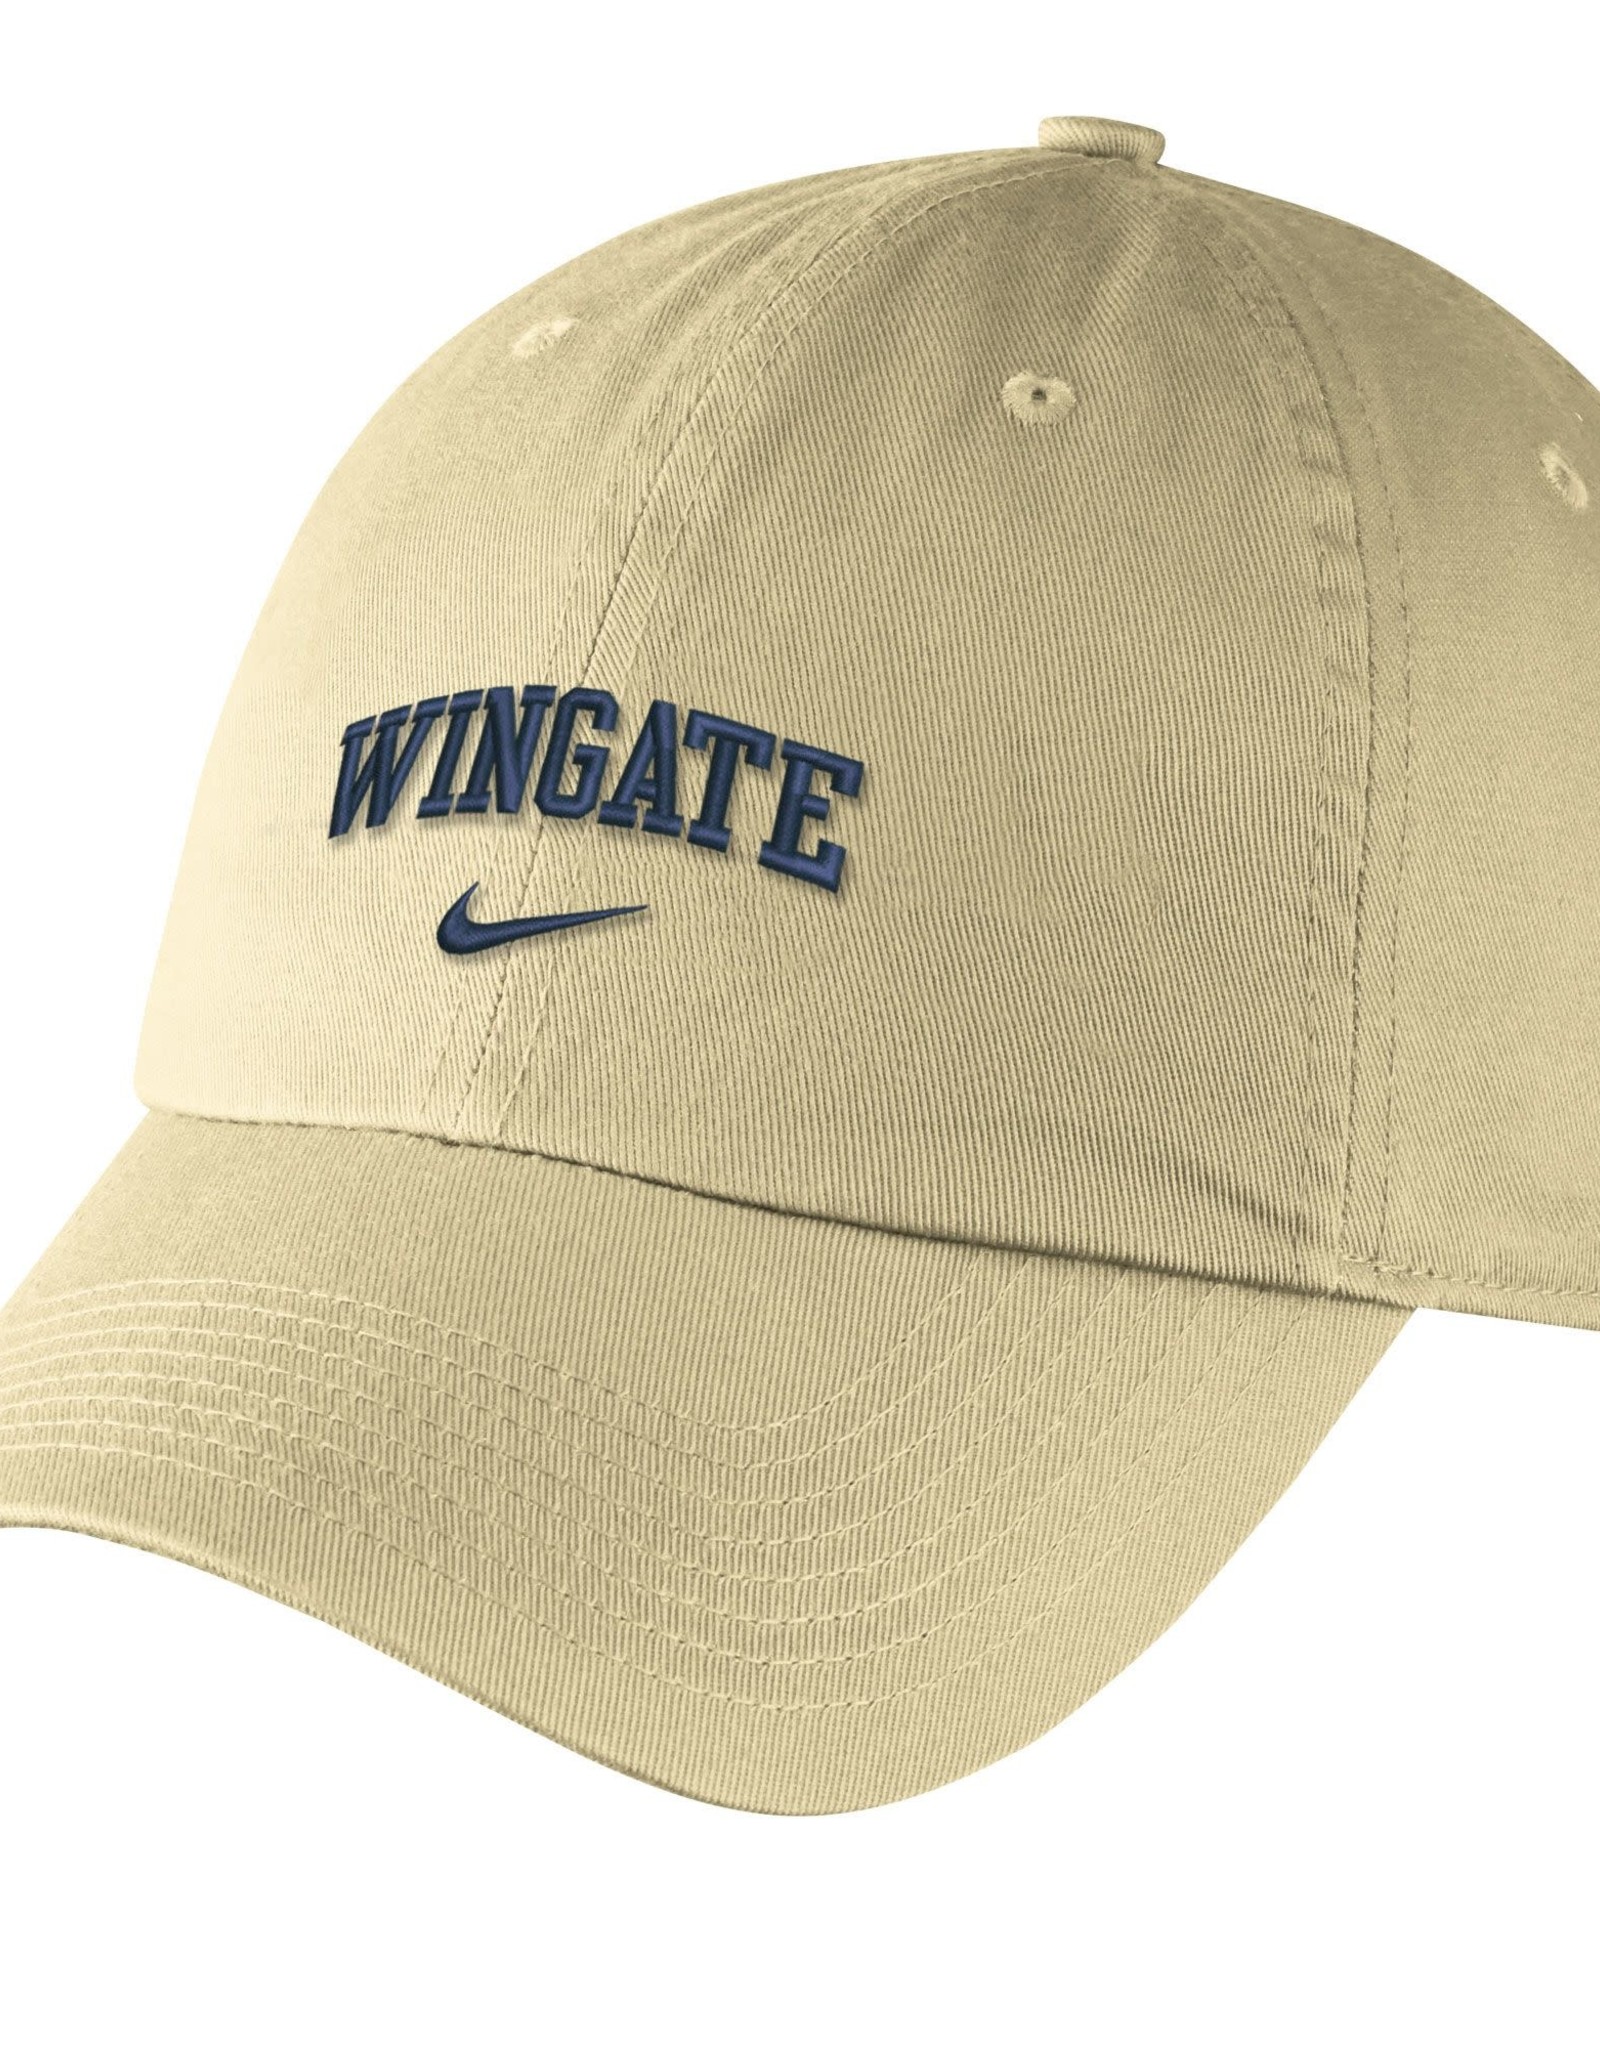 Nike Vegas Gold Wingate Unstructured Adjustable Campus Hat